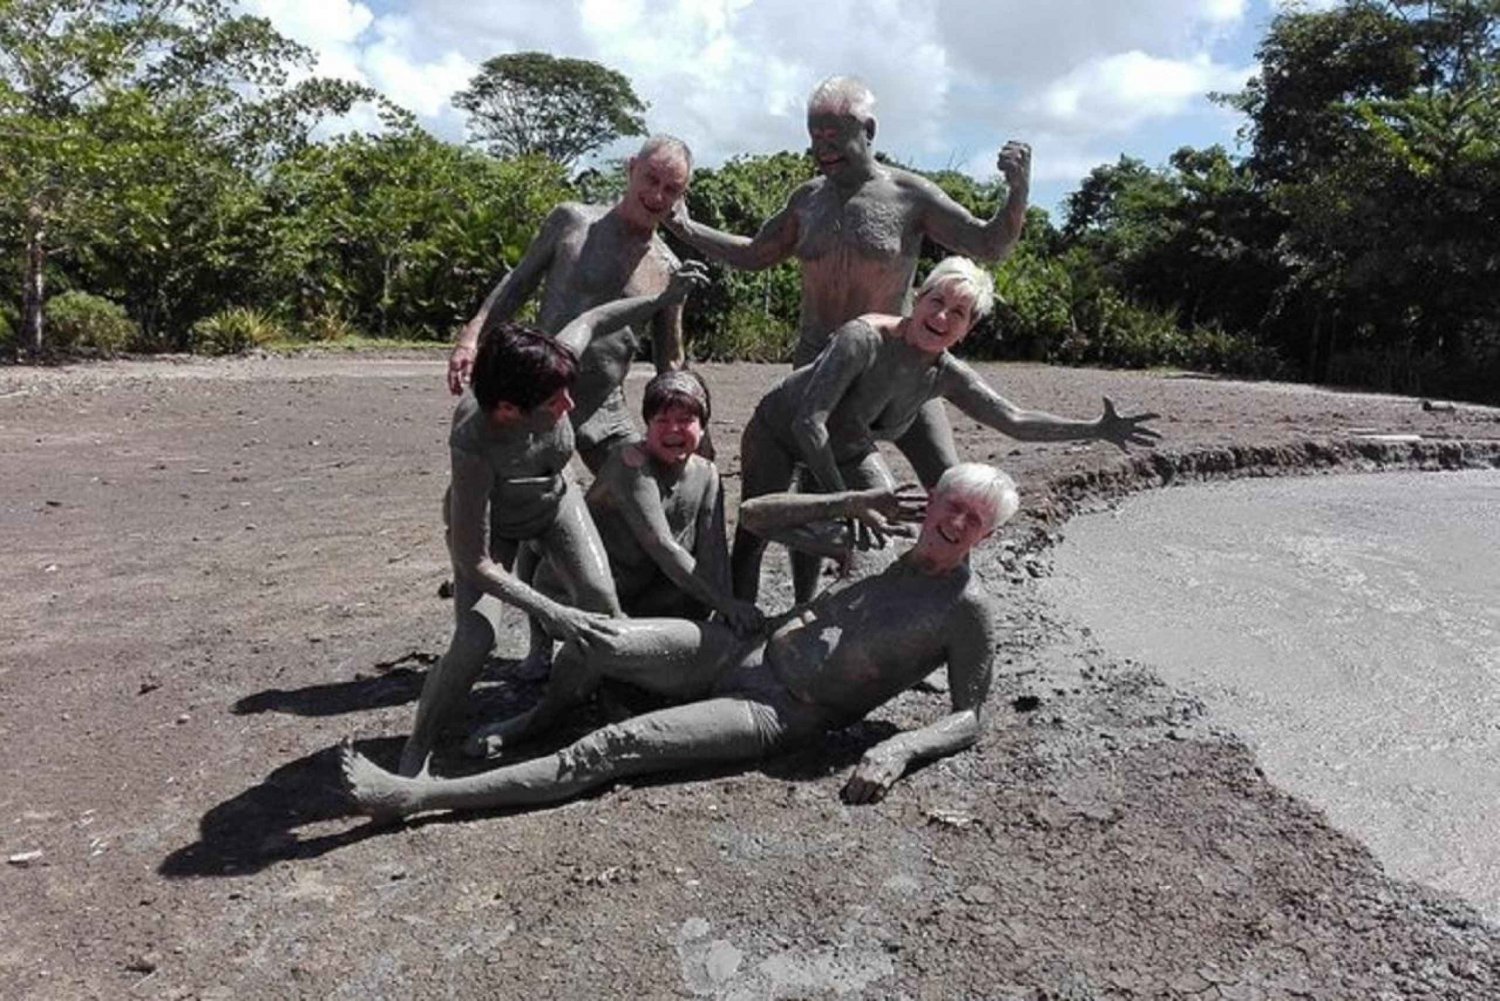 Trinidad: Mud Volcano Tour